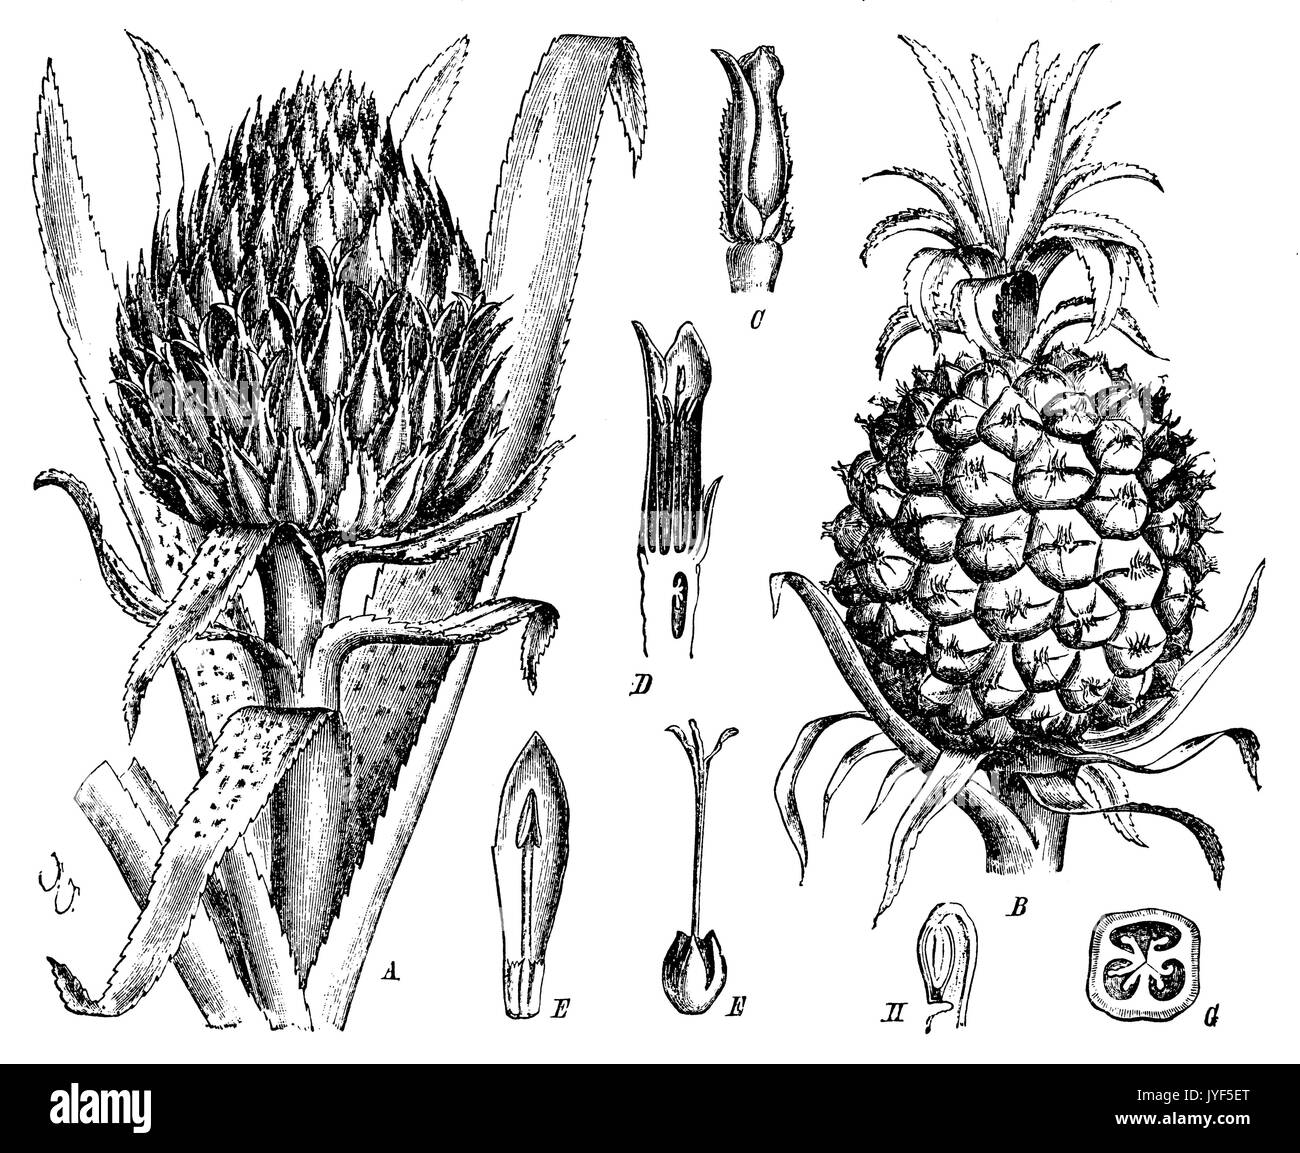 Ananas ein Blütenstand, B, C, D-Blume Blume im Längsschnitt, E Blütenblatt mit staubgefäßen, F Stempel, G Obst Knoten im Querschnitt, H Sämling Stockfoto